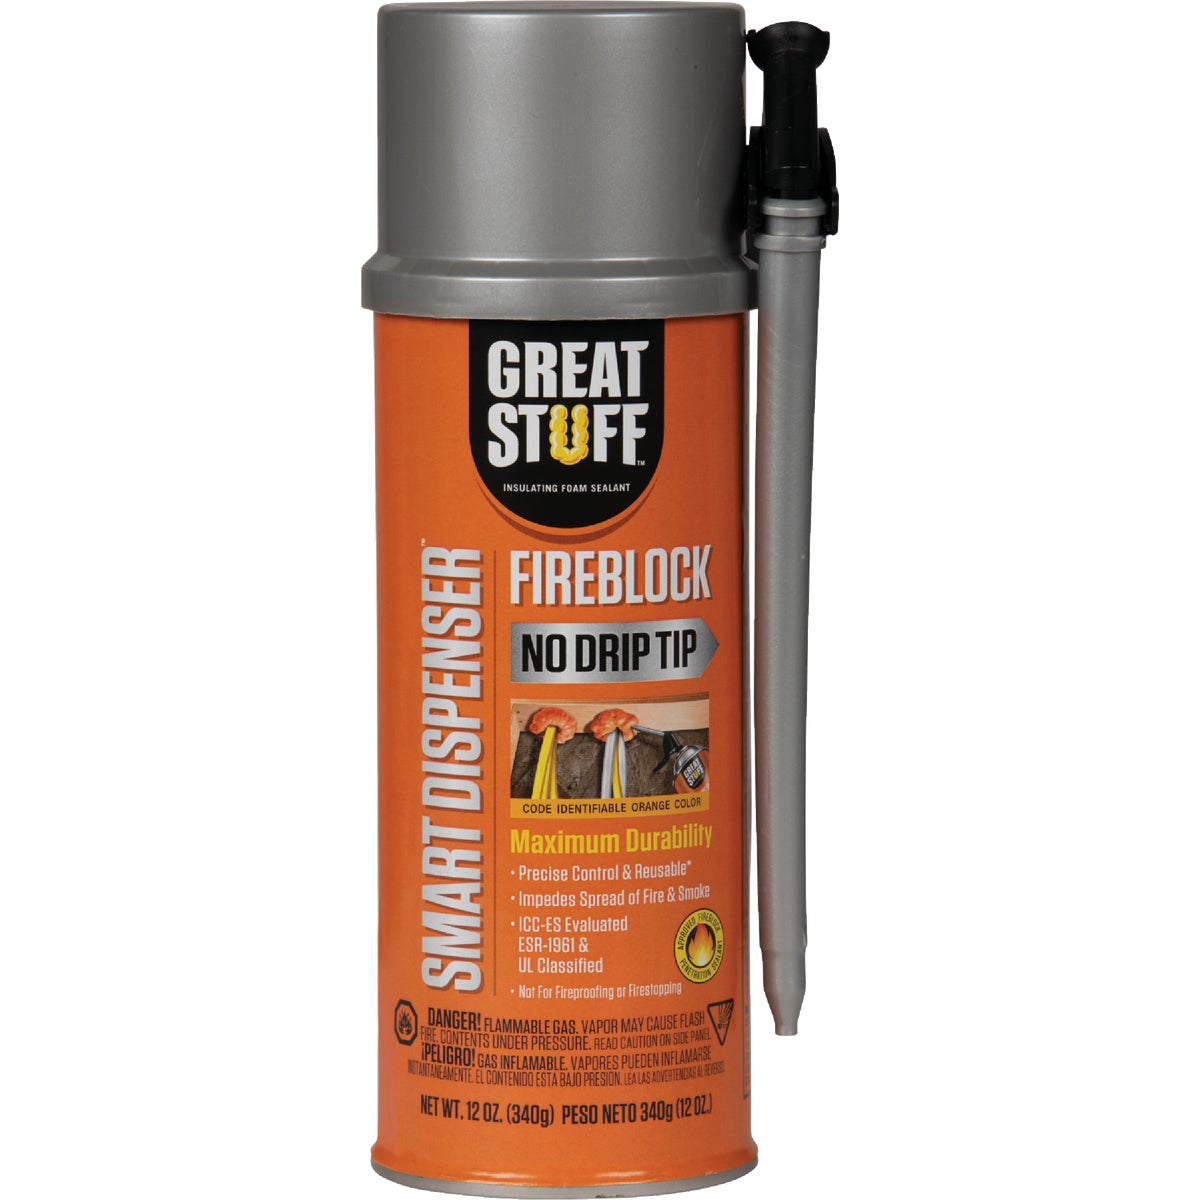 Item 260126, GREAT STUFF Fireblock Insulating Foam Sealant is a ready-to-use, minimal-